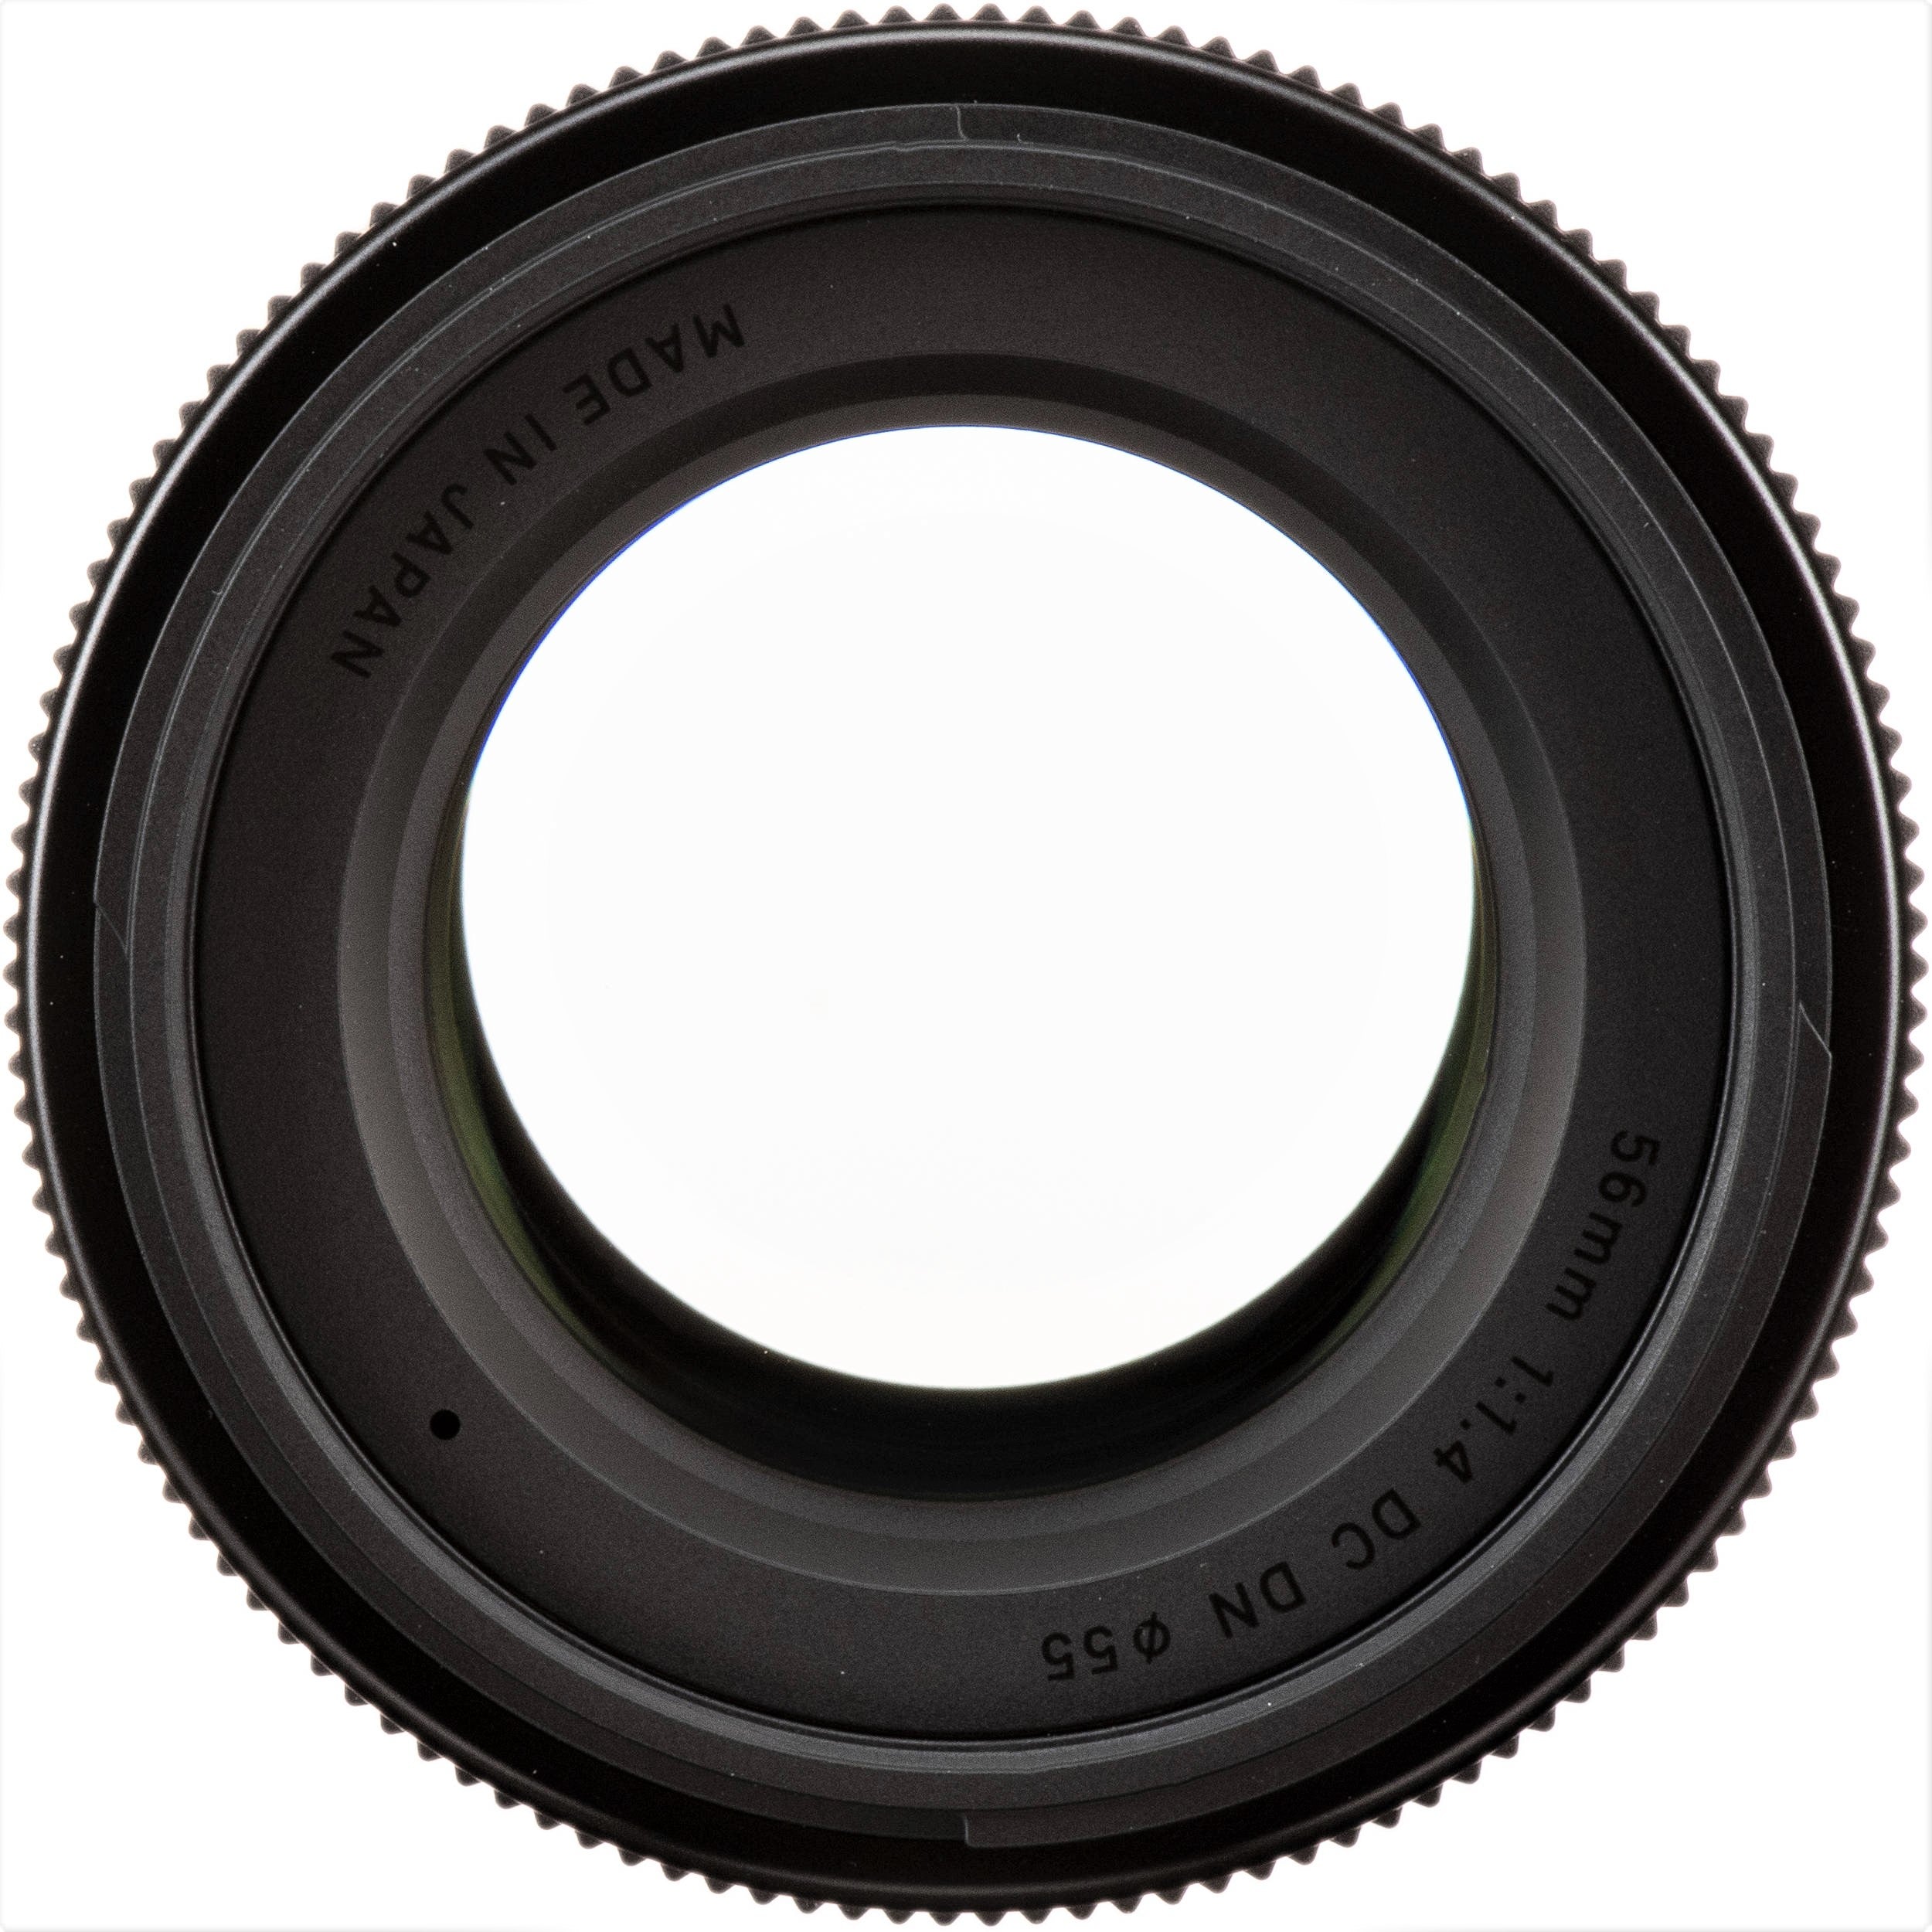 Sigma 56mm f/1.4 DC DN Contemporary Lens for Micro Four Thirds